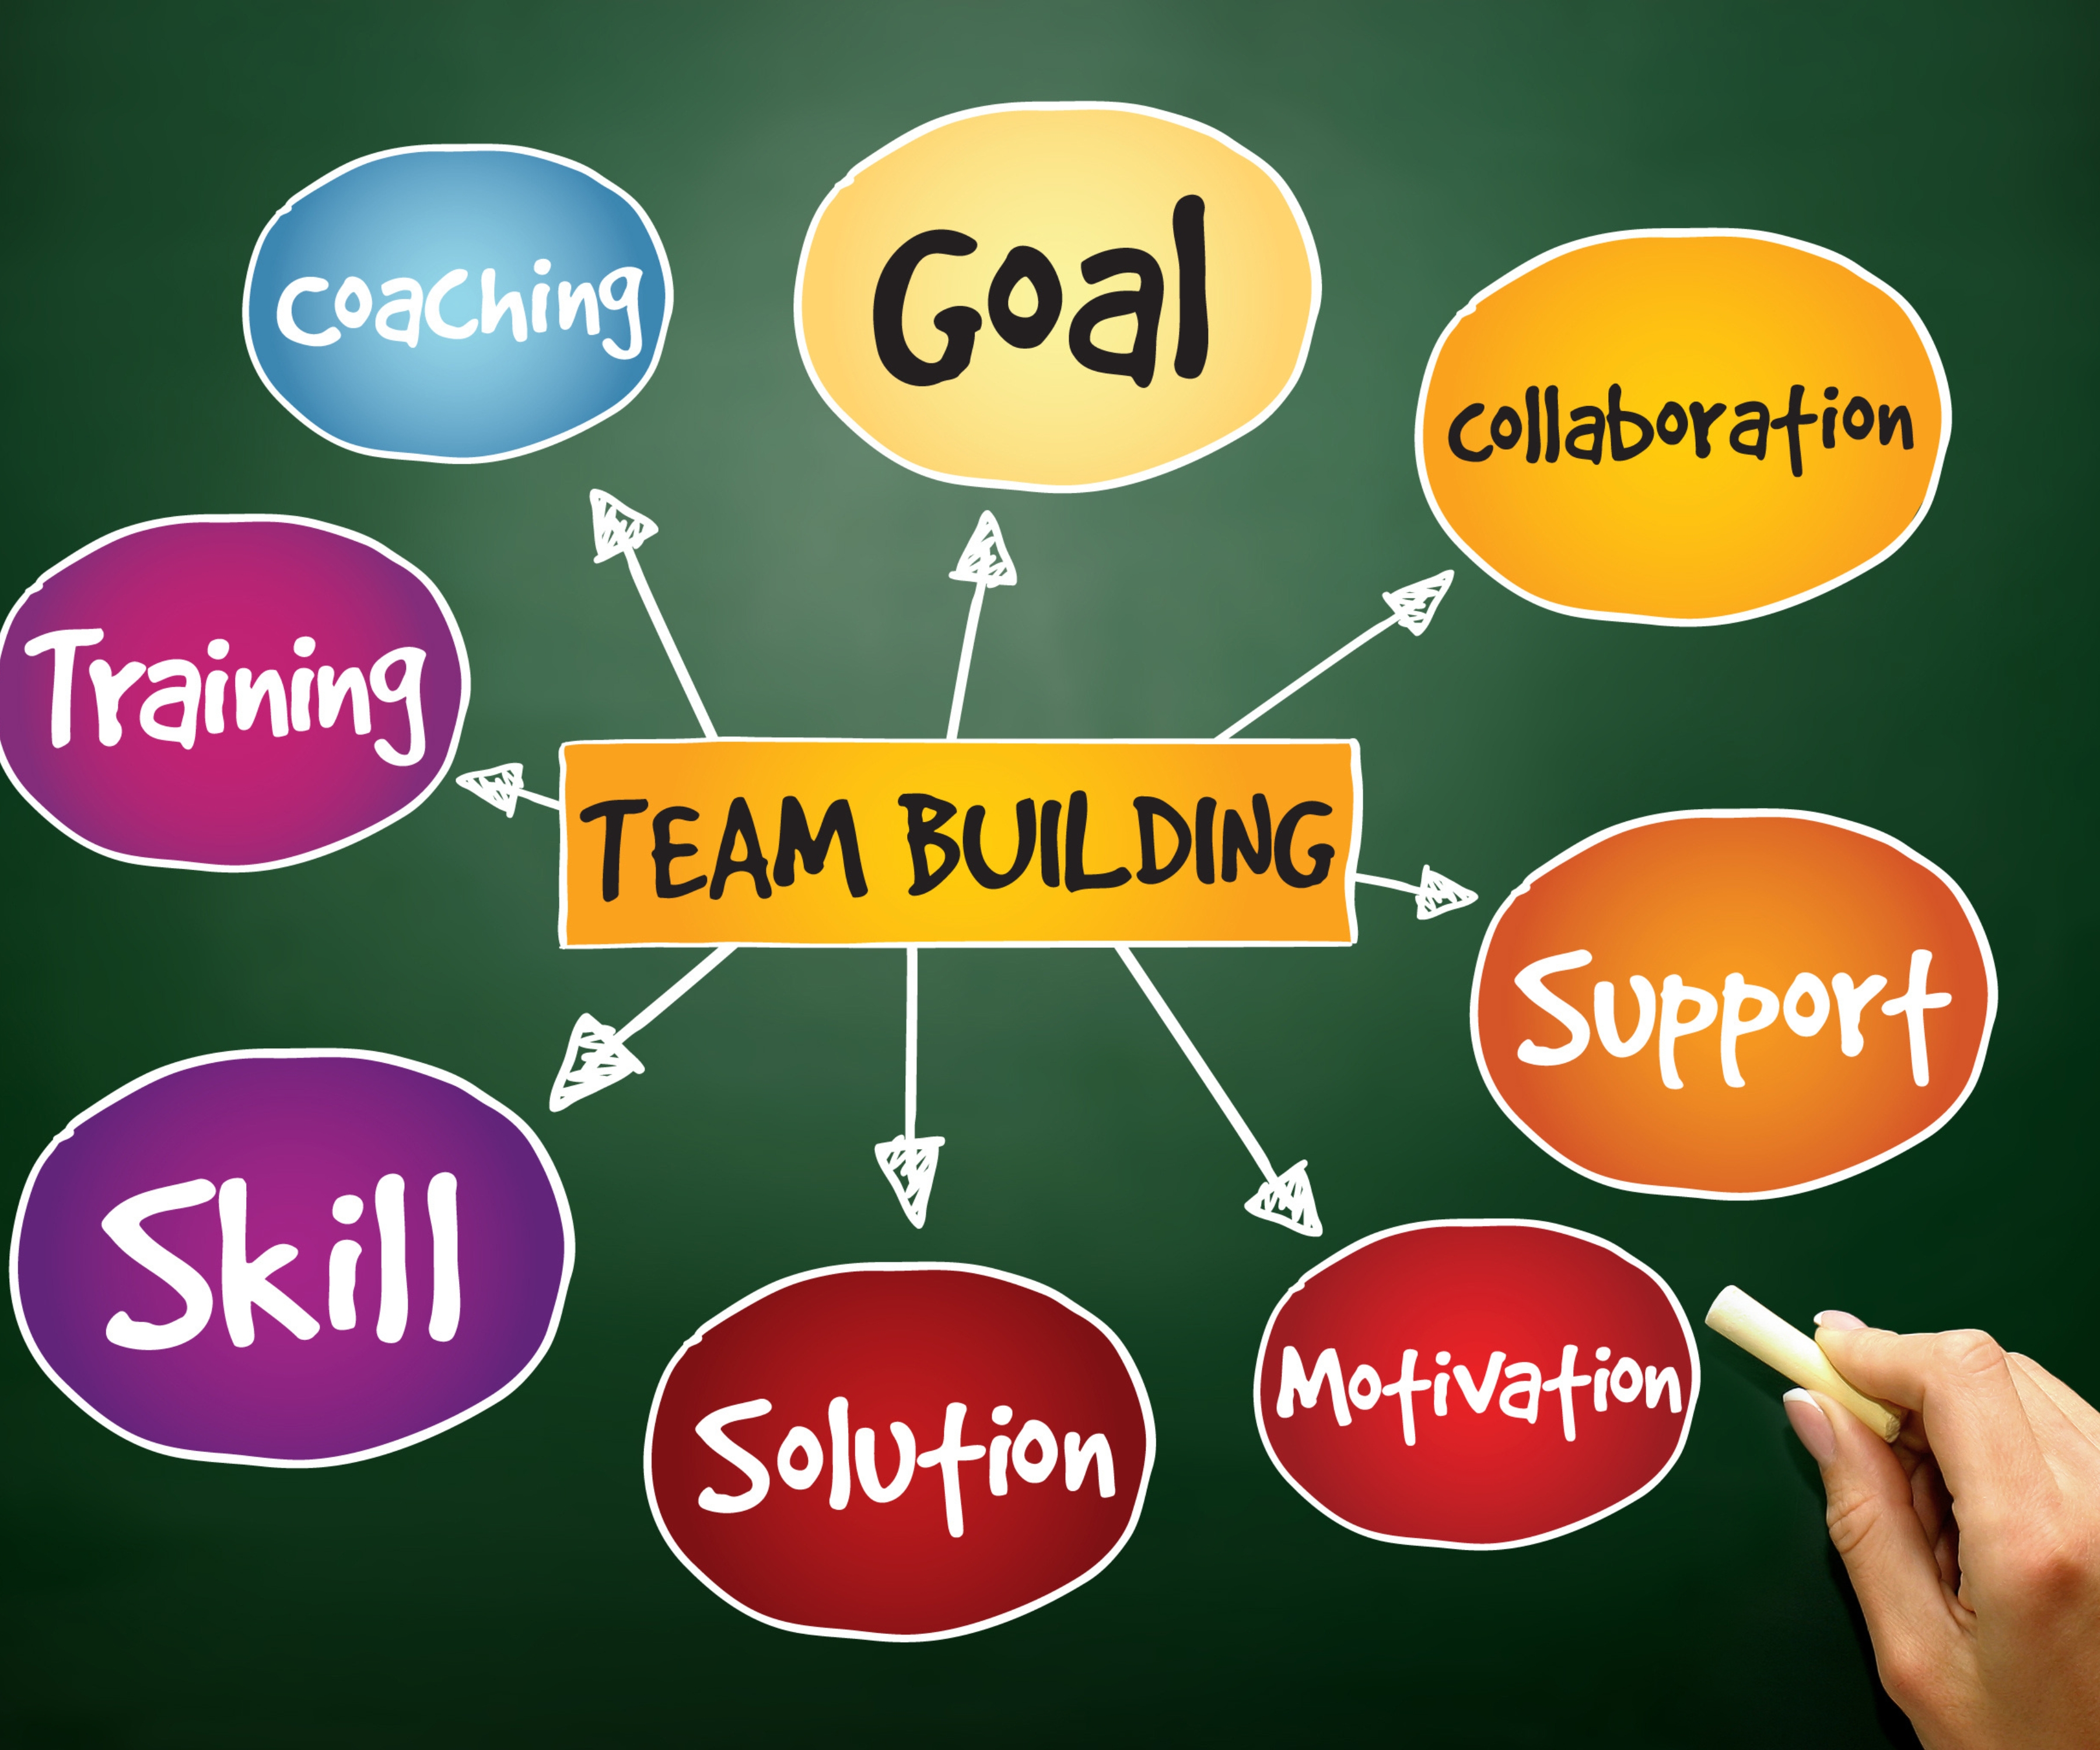 Team Building / Motivation